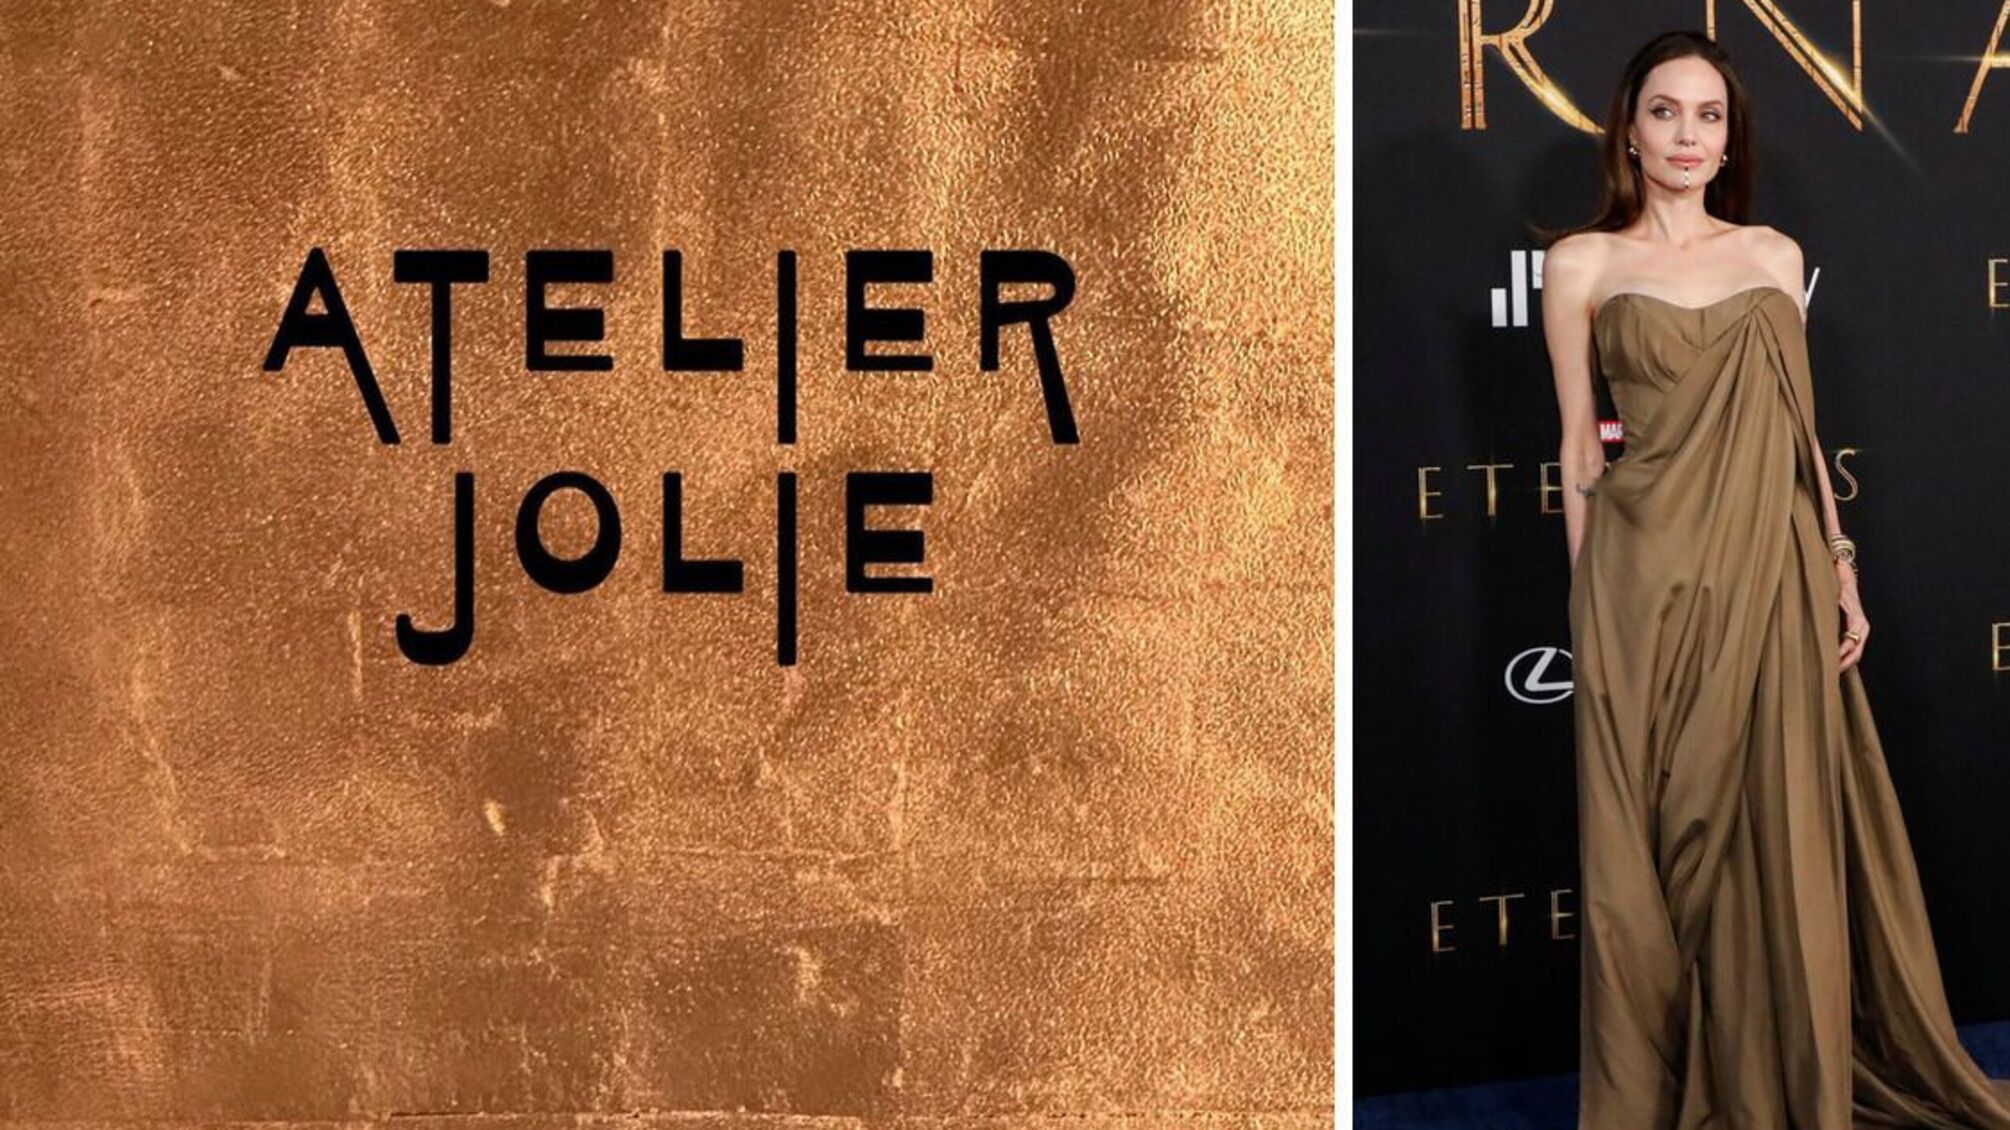 Анджели Джоли и модный бренд Atelier Jolie